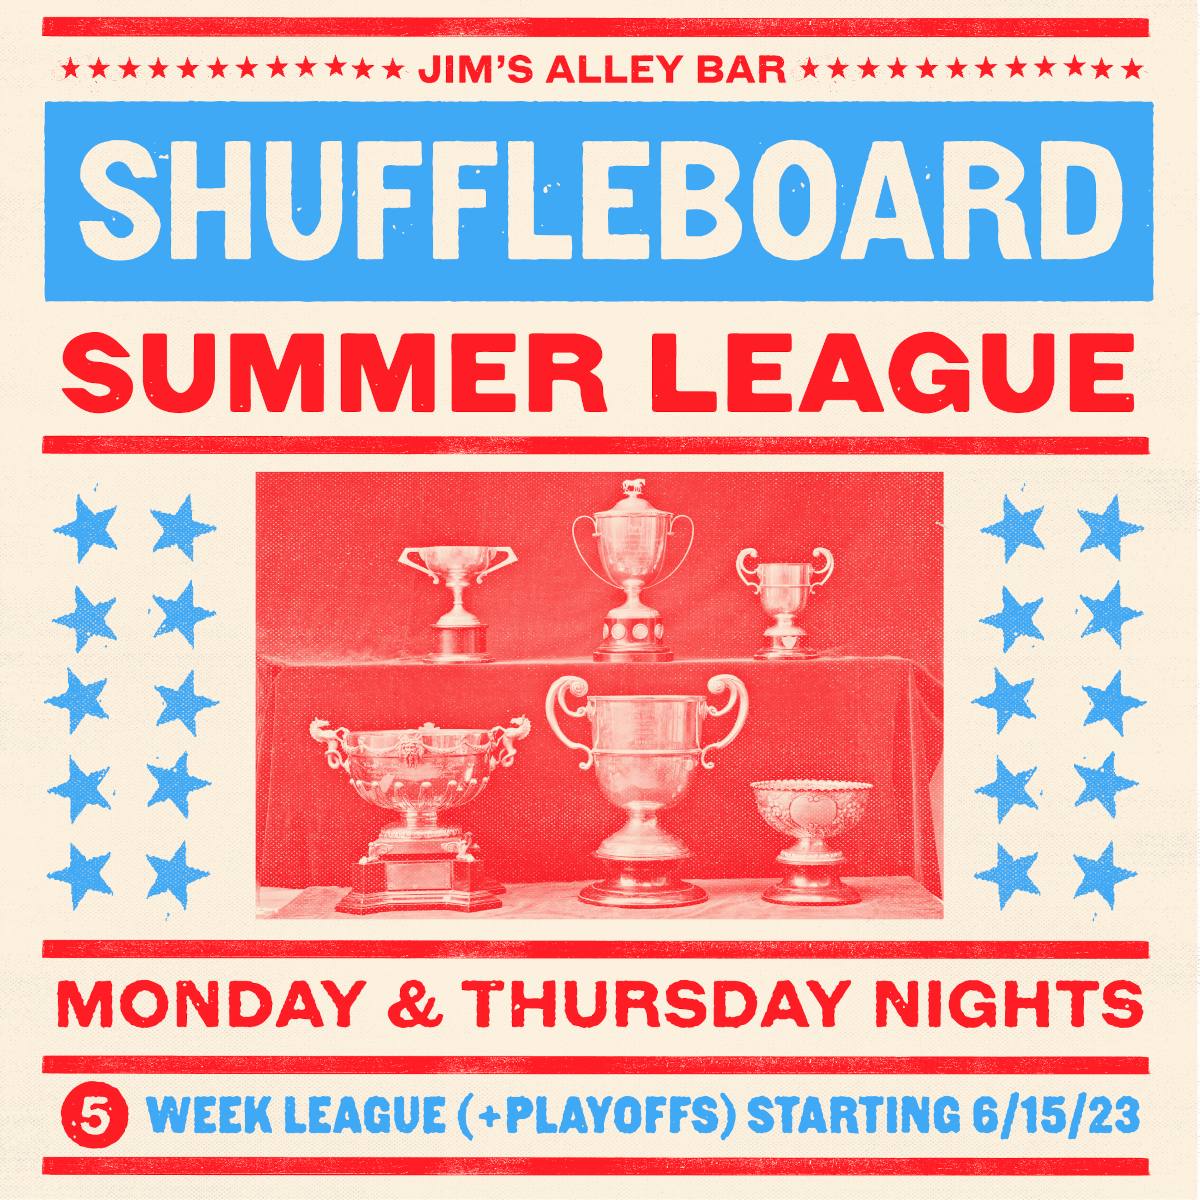 Shuffleboard summer league